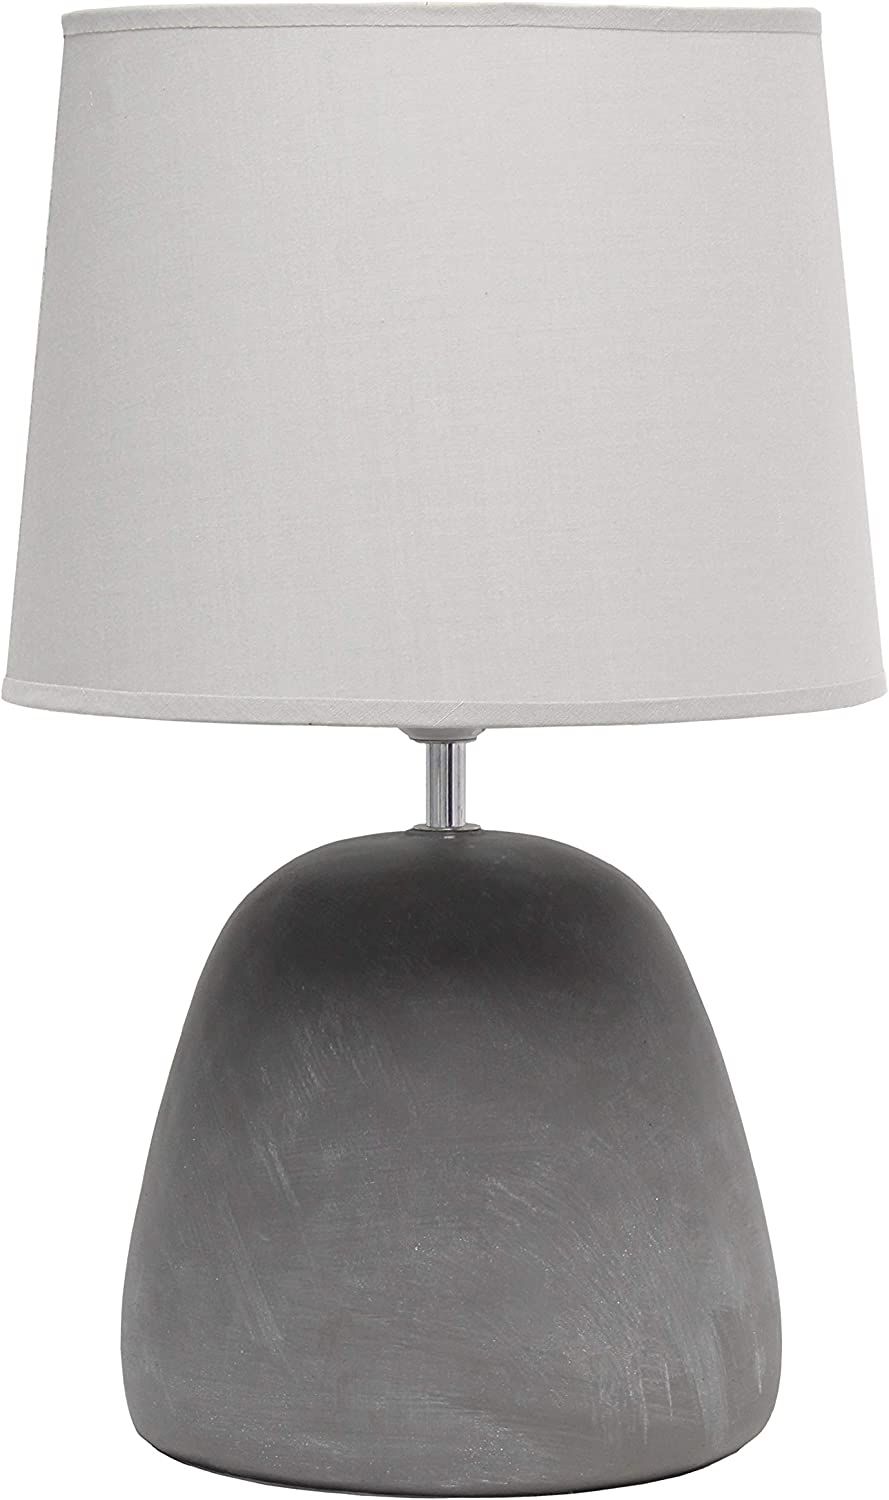 Simple Designs LT2058-GRY Round Concrete Table Lamp, Gray 10.25"L x 10.25"W x 16.5"H | Amazon (US)